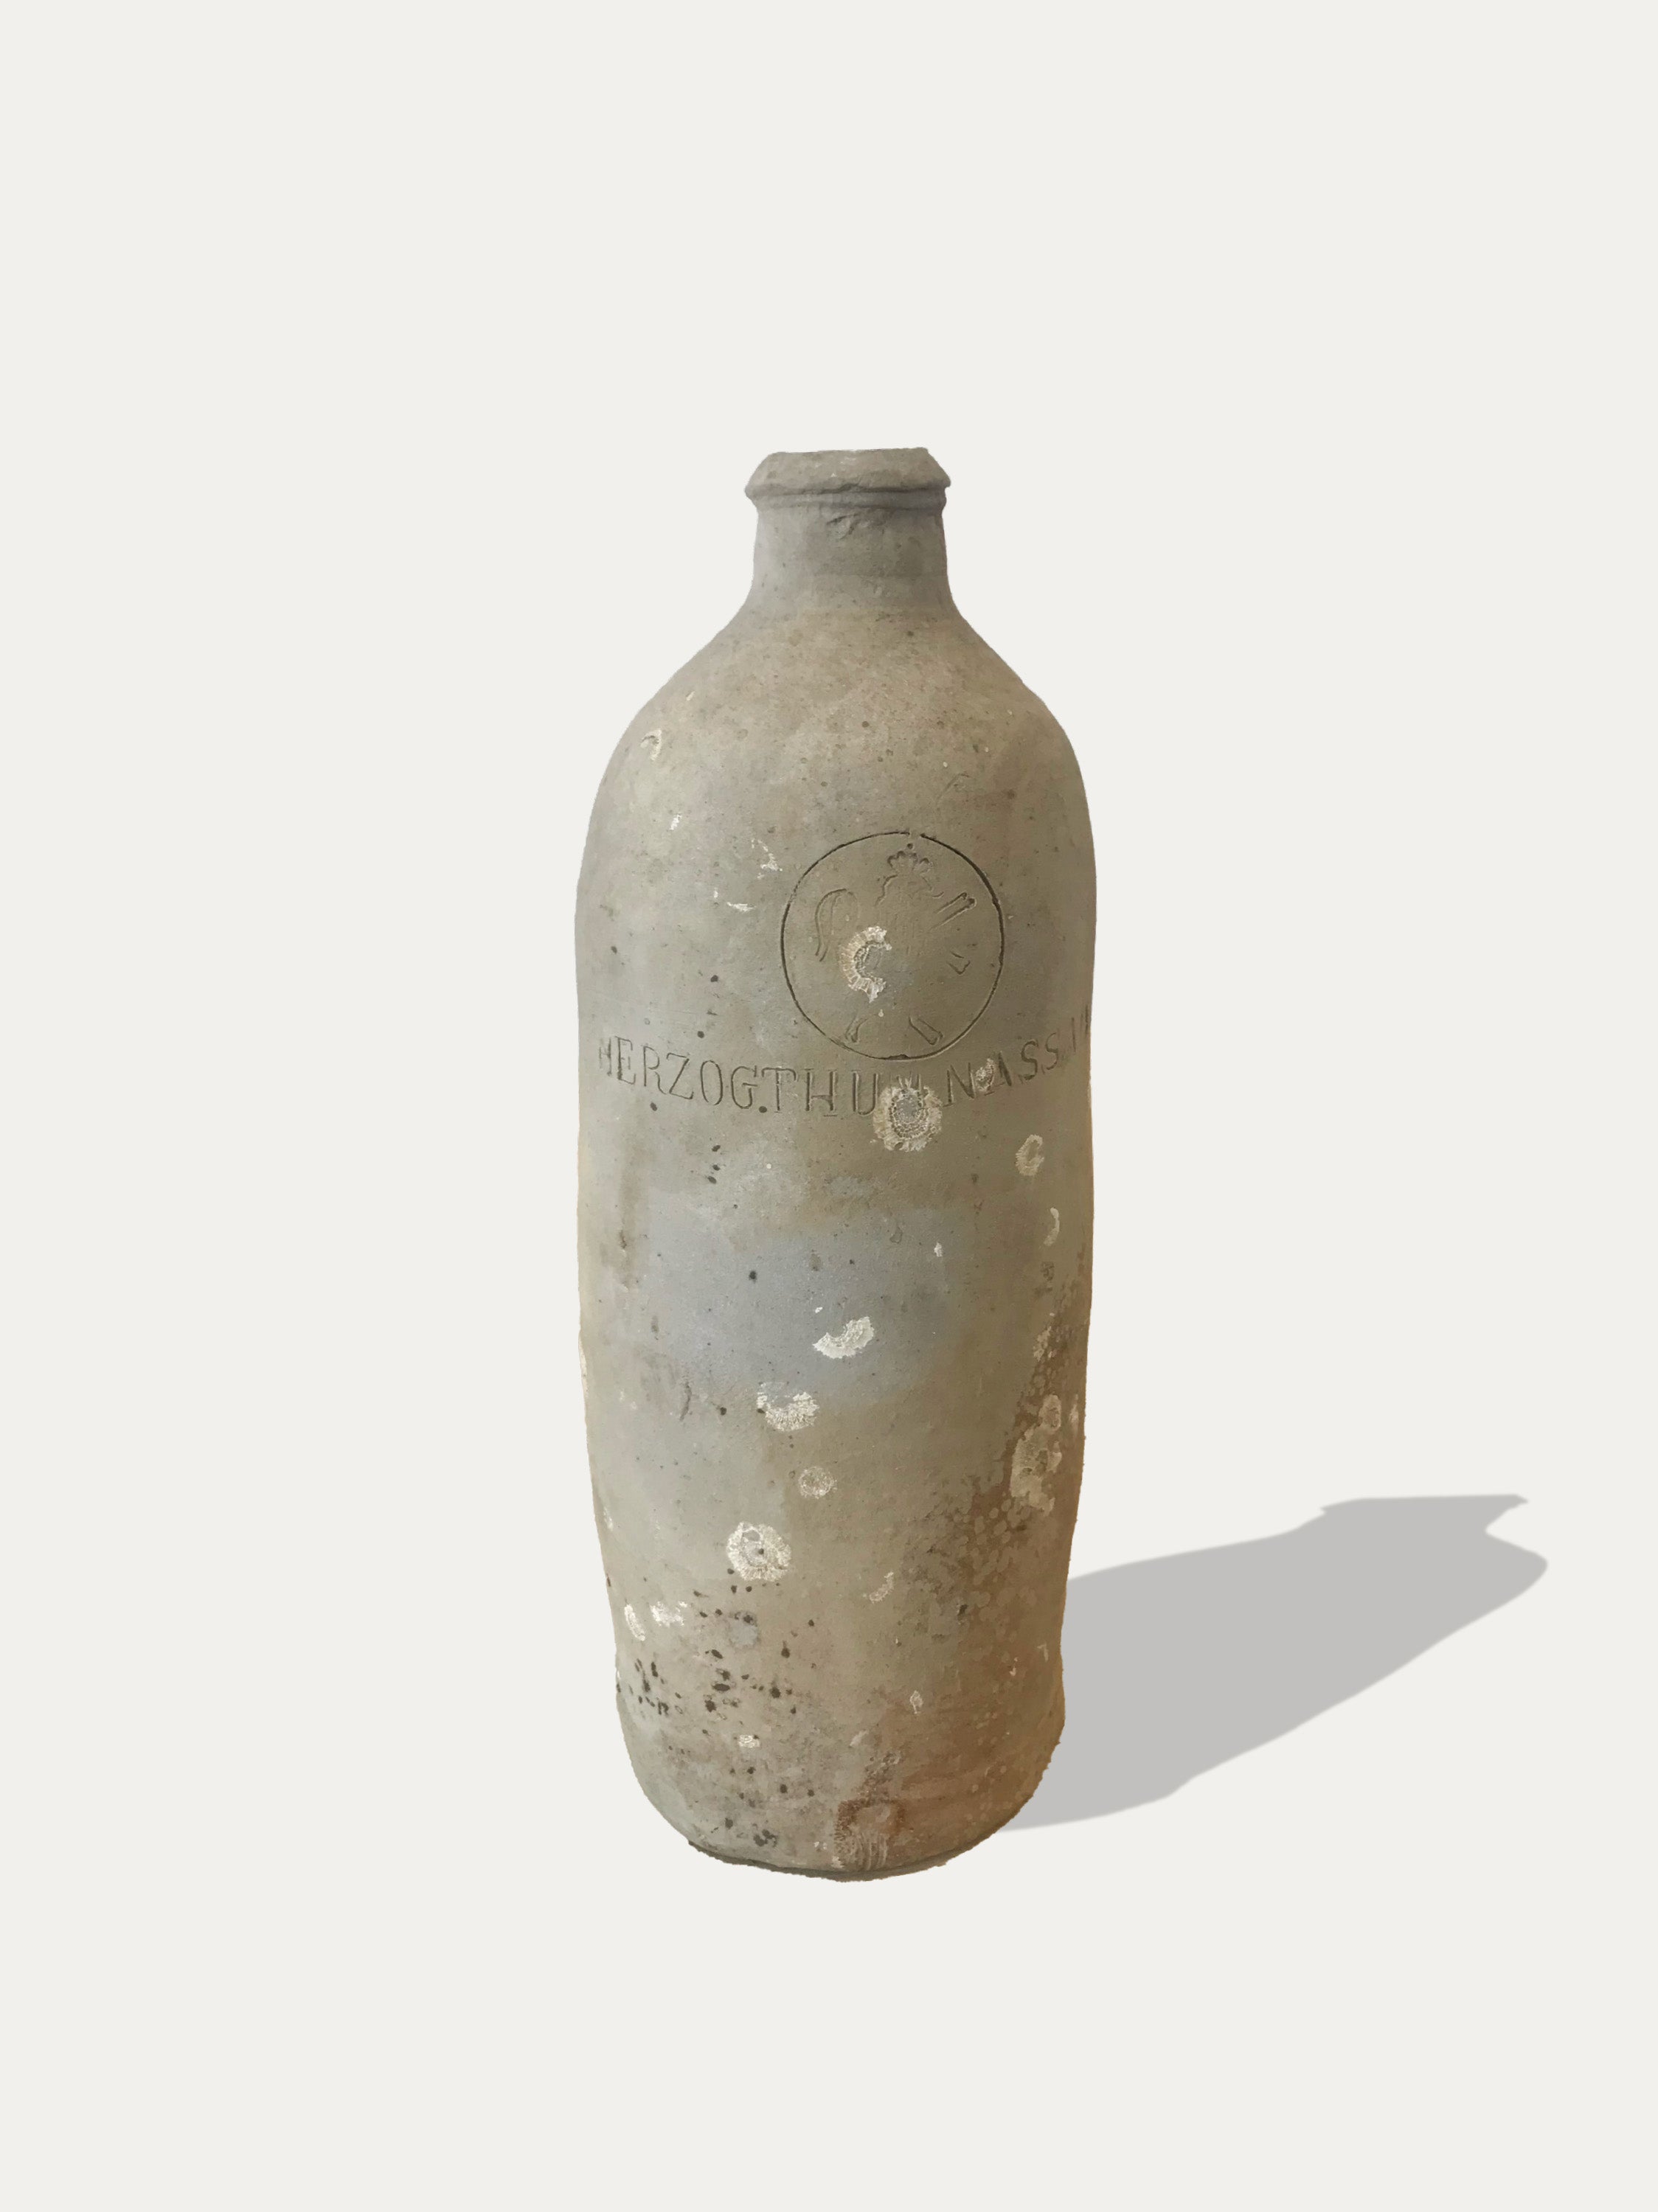 Terracotta Water jug from Borneo